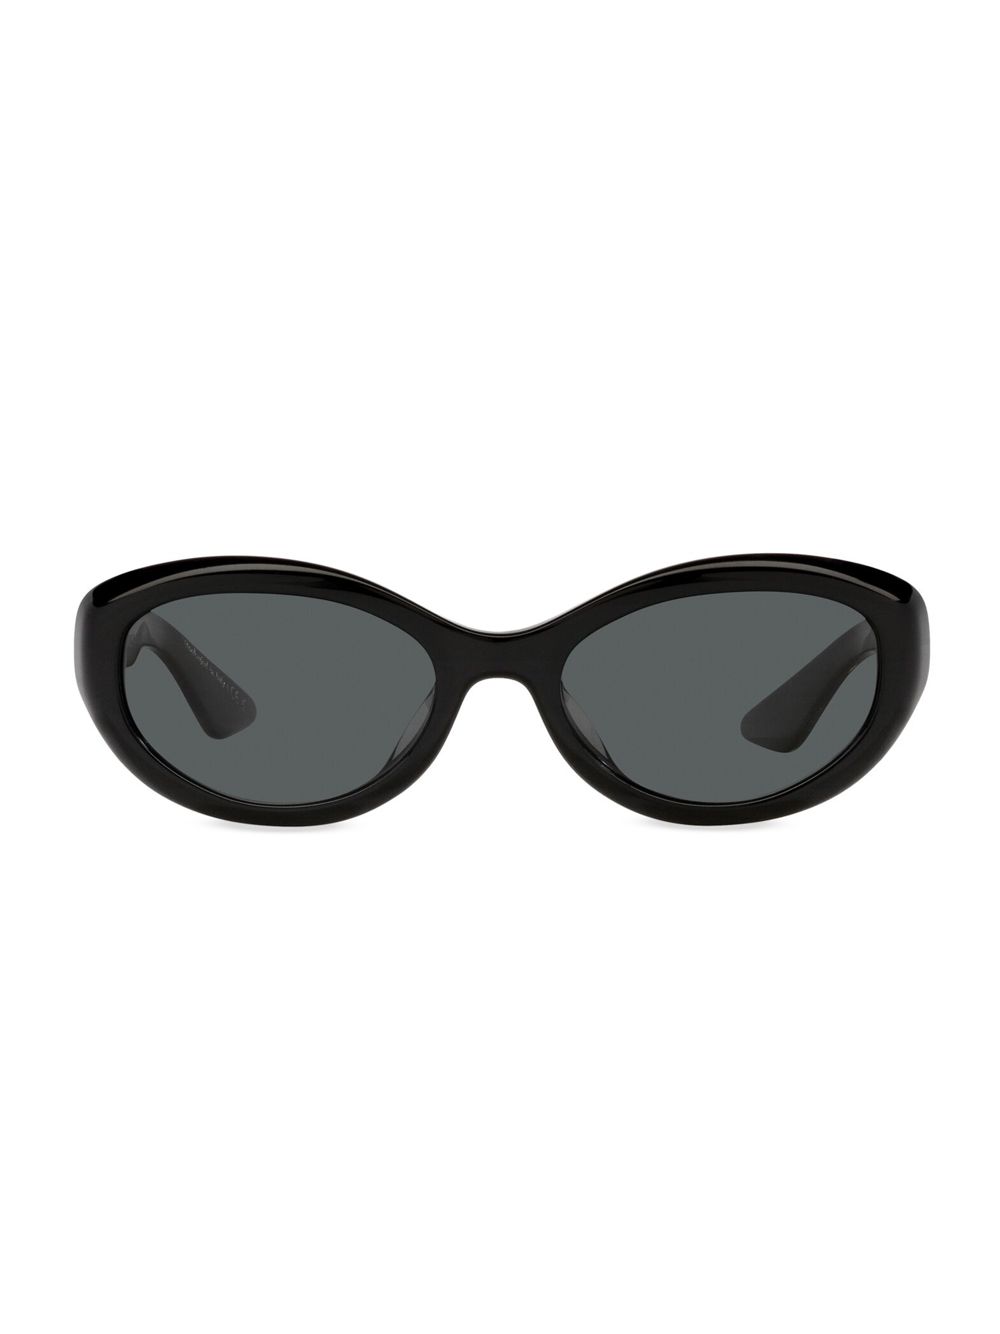 Овальные солнцезащитные очки Oliver Peoples 53MM KHAITE x Oliver Peoples, черный солнцезащитные очки oliver peoples x khaite 1983c белый